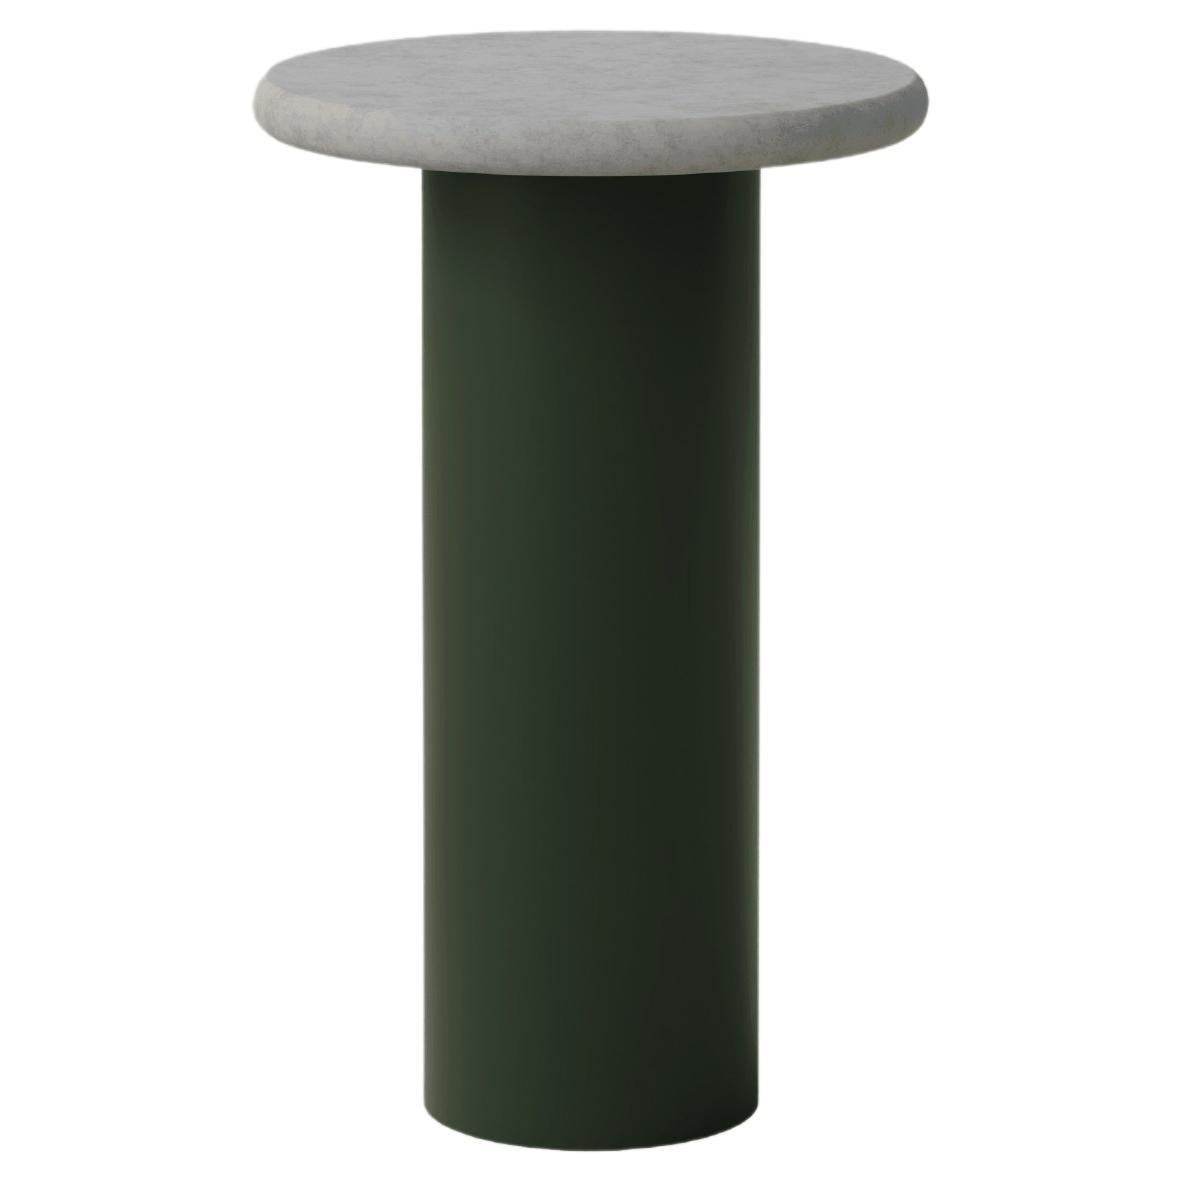 Raindrop Coffee Table, 300, Microcrete / Moss Green For Sale